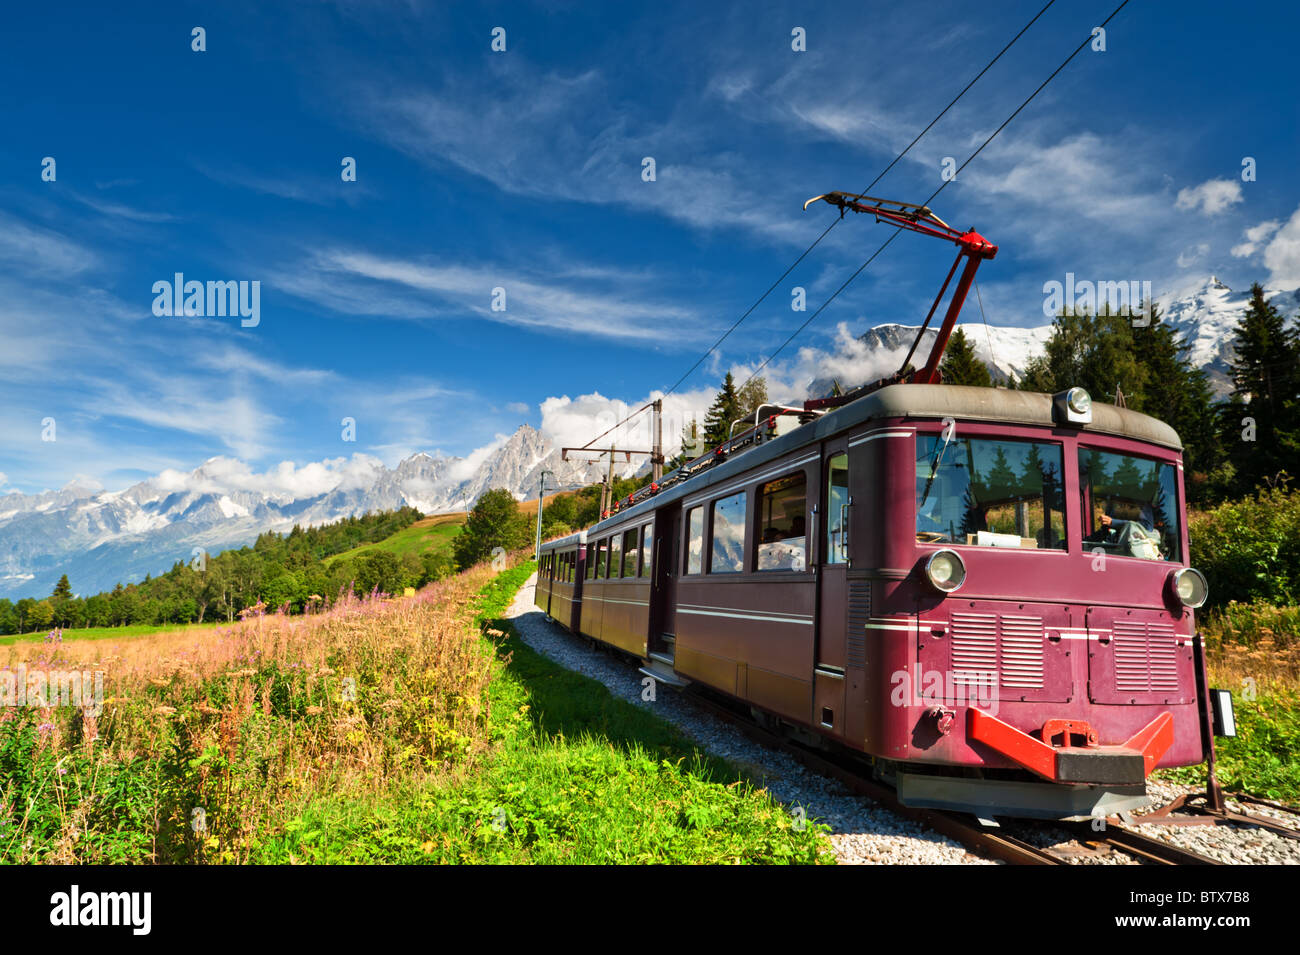 Mountain tram in Alps under blue sky. France, Chamonix valley. Popular touristic destination. Stock Photo